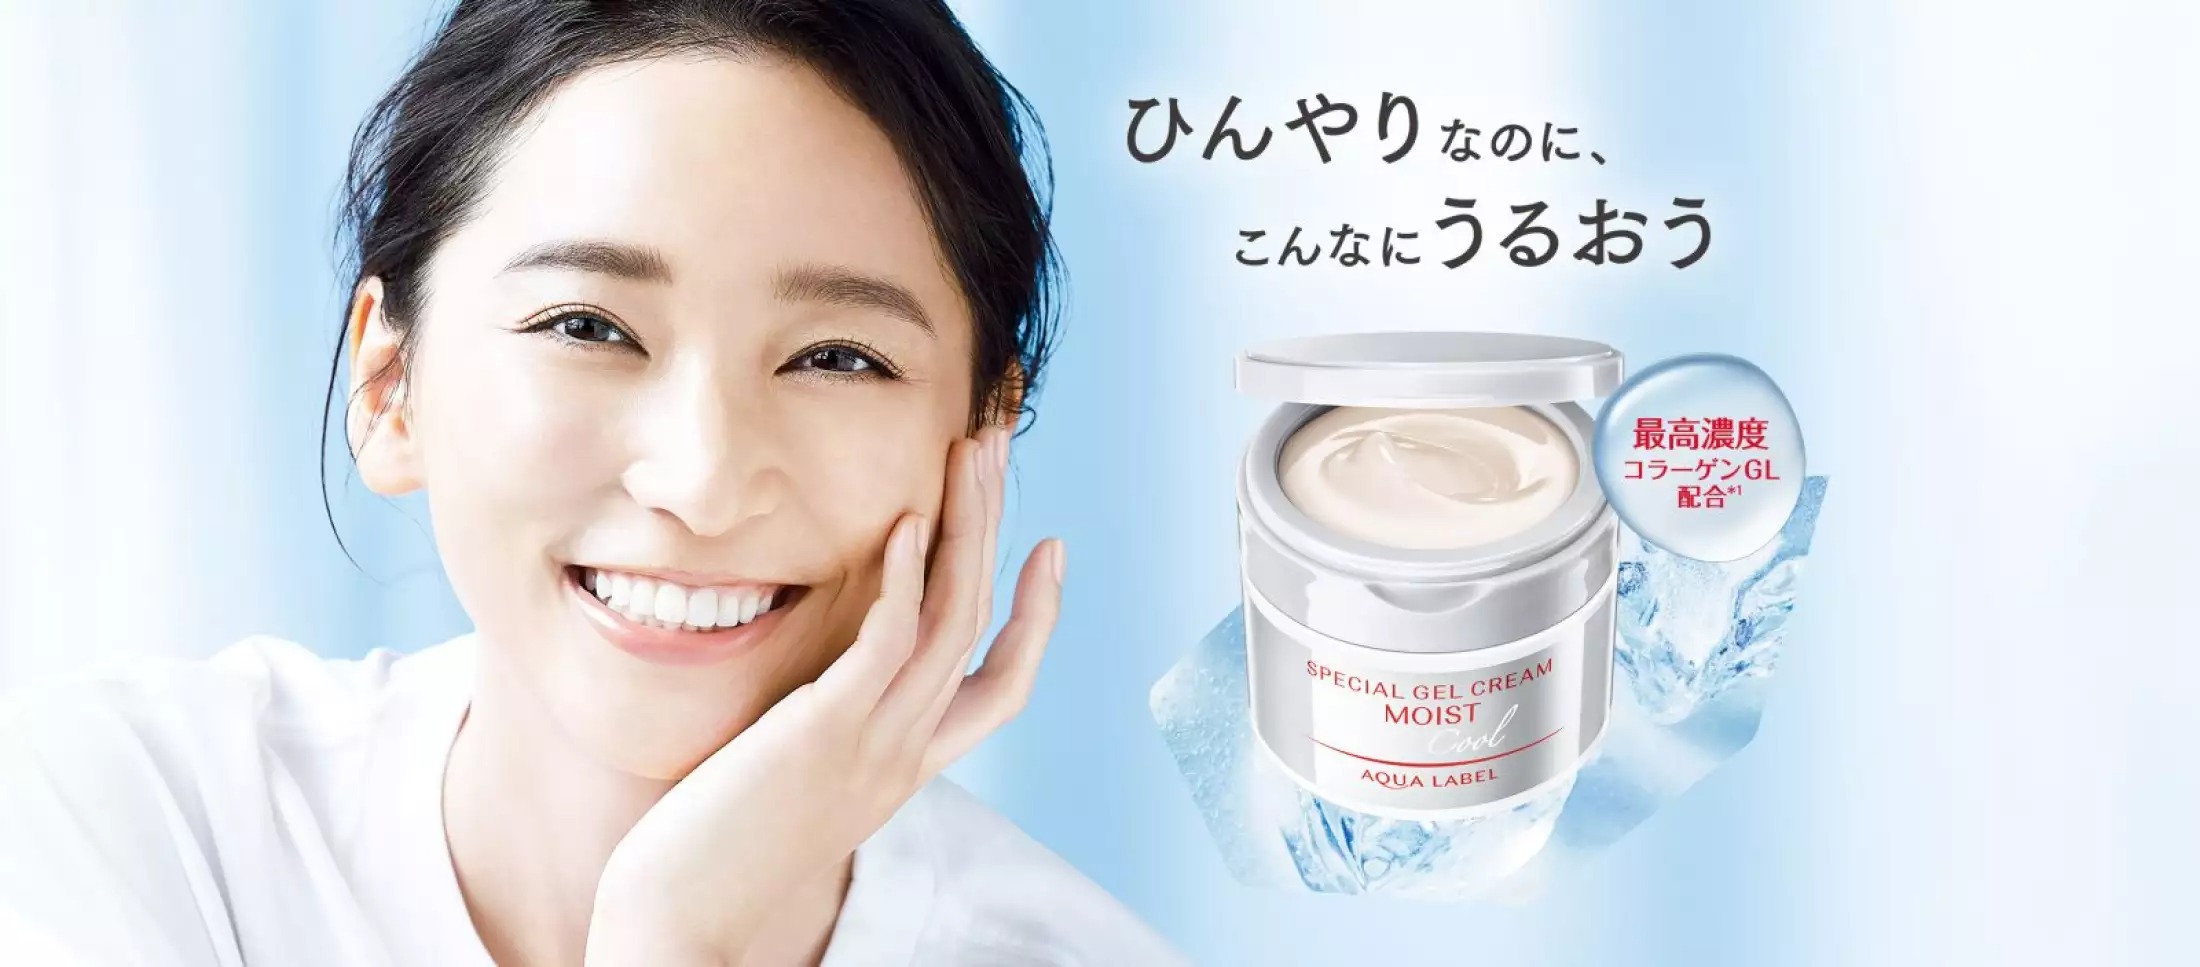 kem duong shiseido aqualabel special gel cream moist cool 90g nhat ban